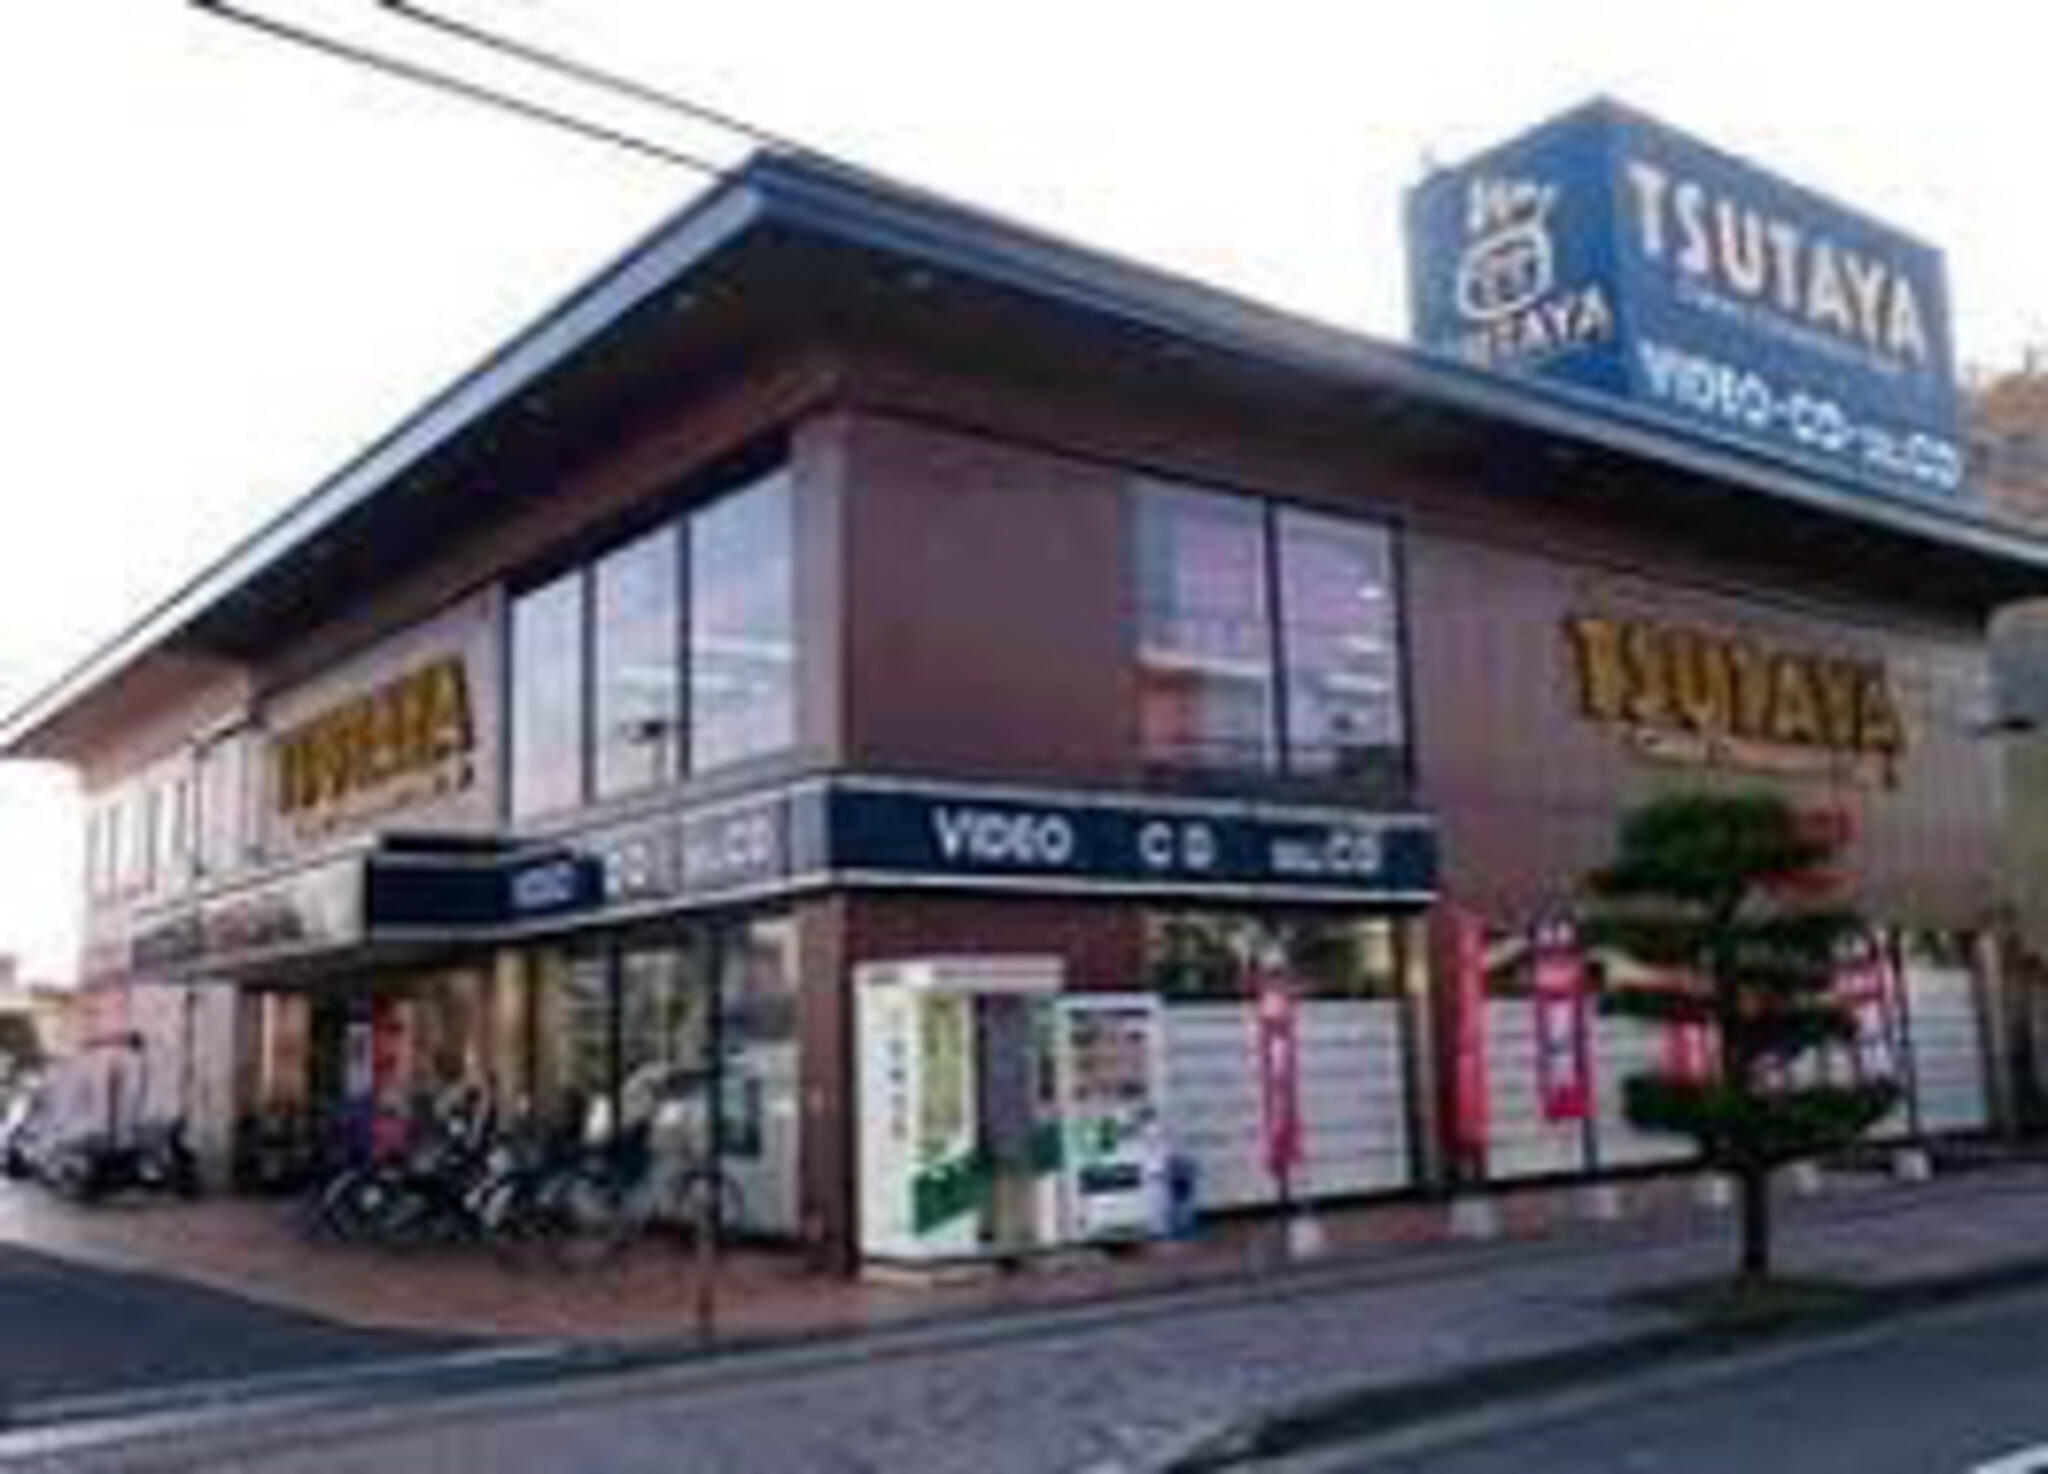 TSUTAYA 加古川店の代表写真3